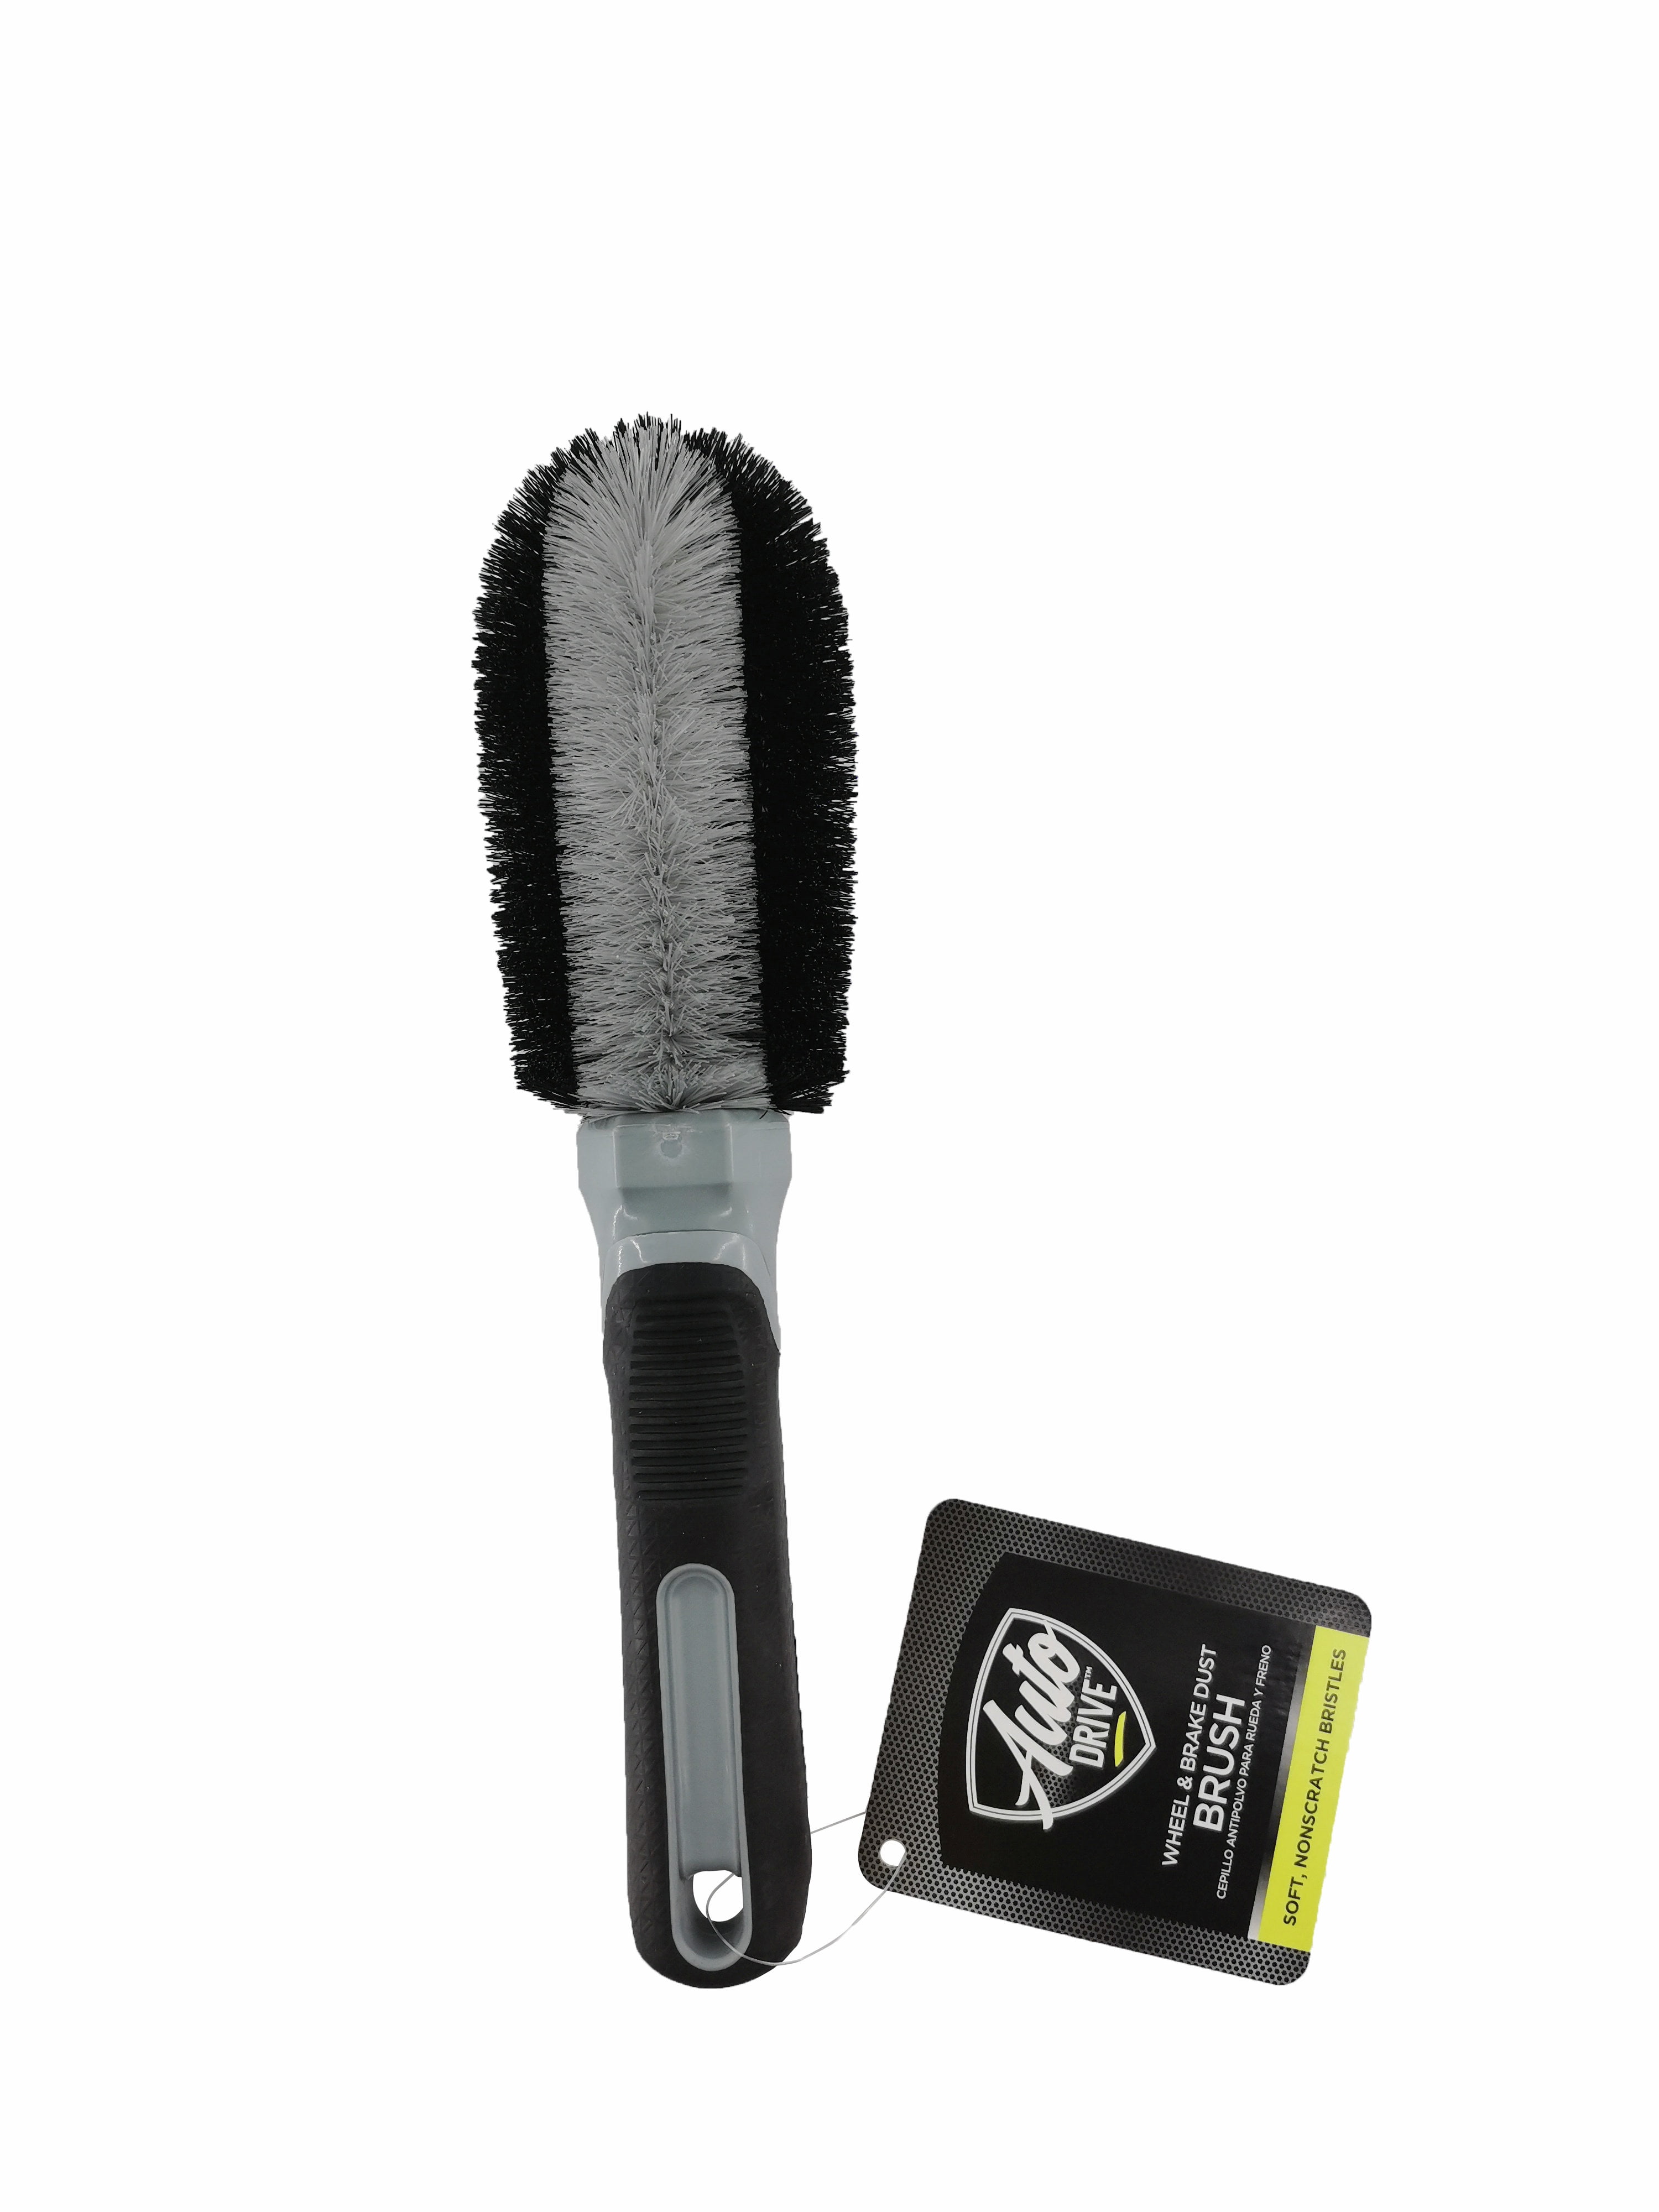 1 Pcs Car Wheel Brush Shoe Brush Car wash brush Household Cleaning